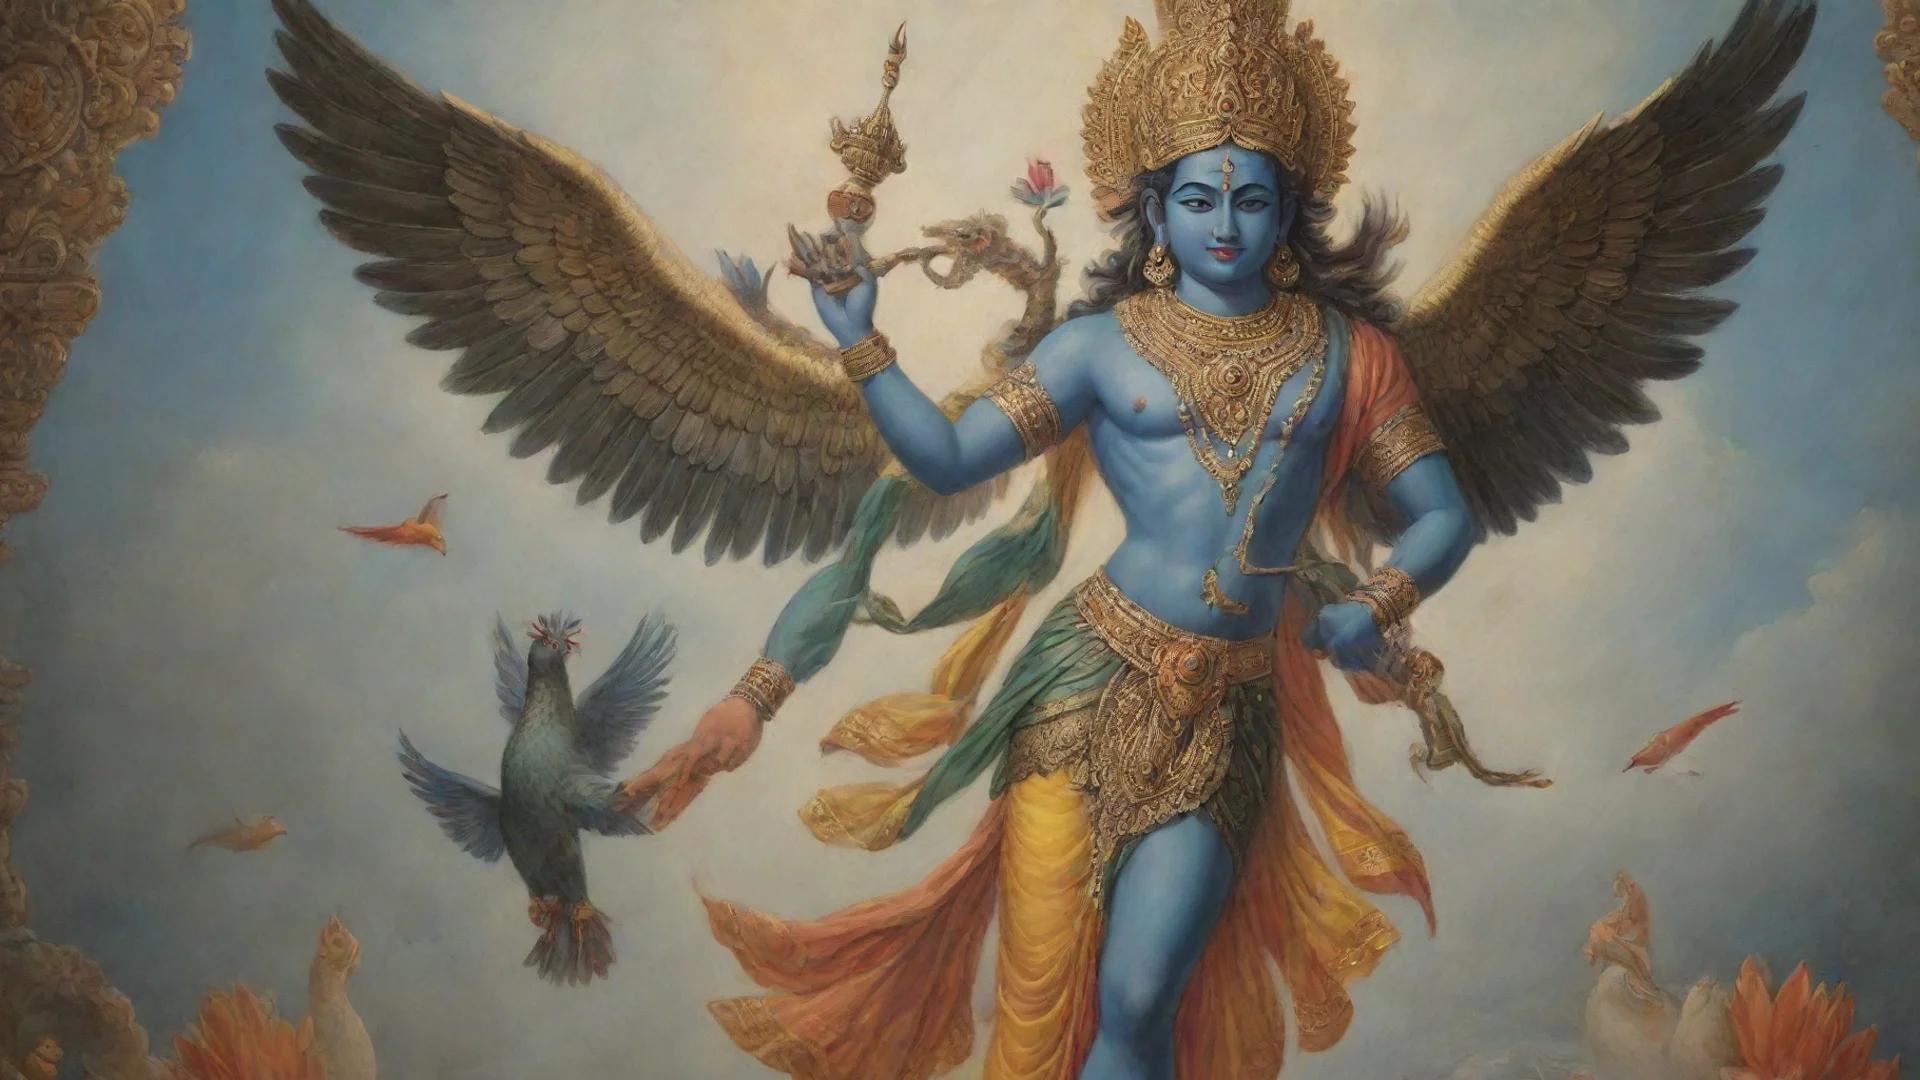 aiamazing hindu lord vishnu with garuda bird awesome portrait 2 wide